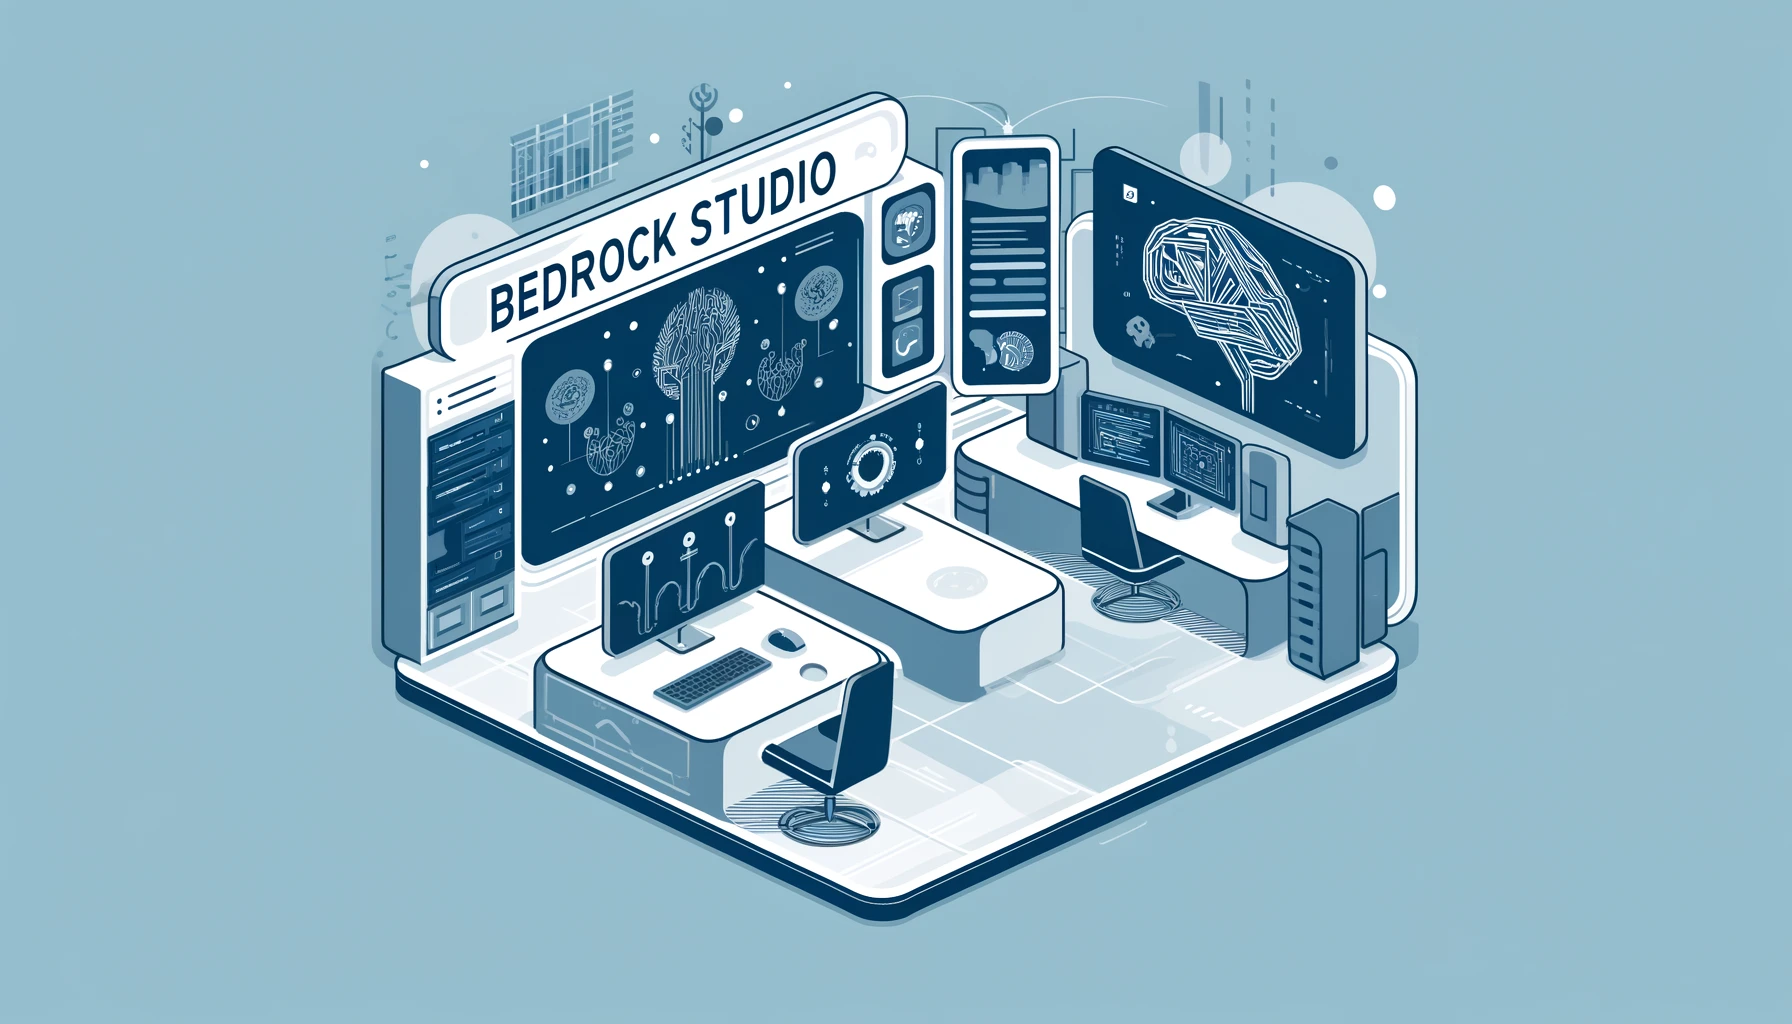 Bedrock Studio is Amazon’s initiative to streamline the development of generative AI applications.